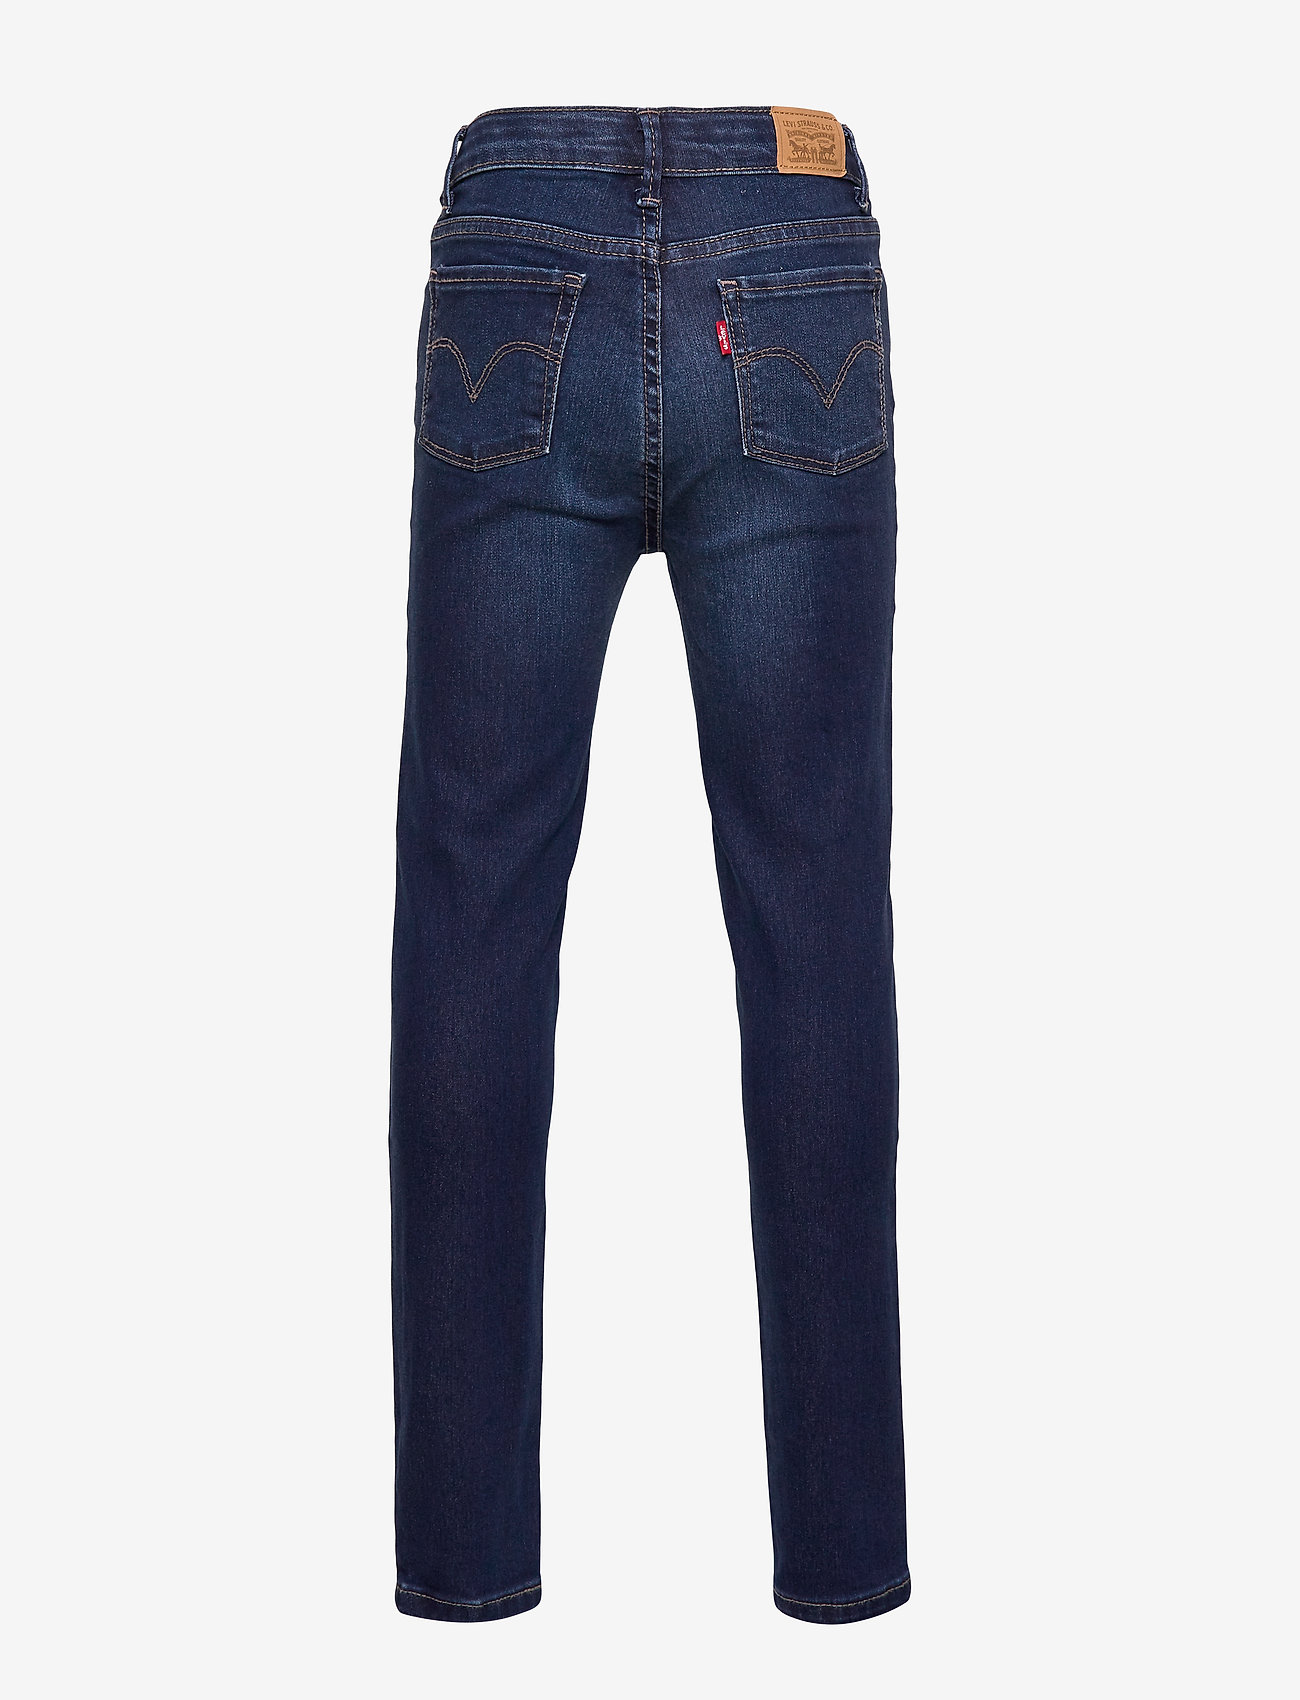 Levi's - Levi's® 710 Super Skinny Fit Jeans - skinny jeans - complex - 1